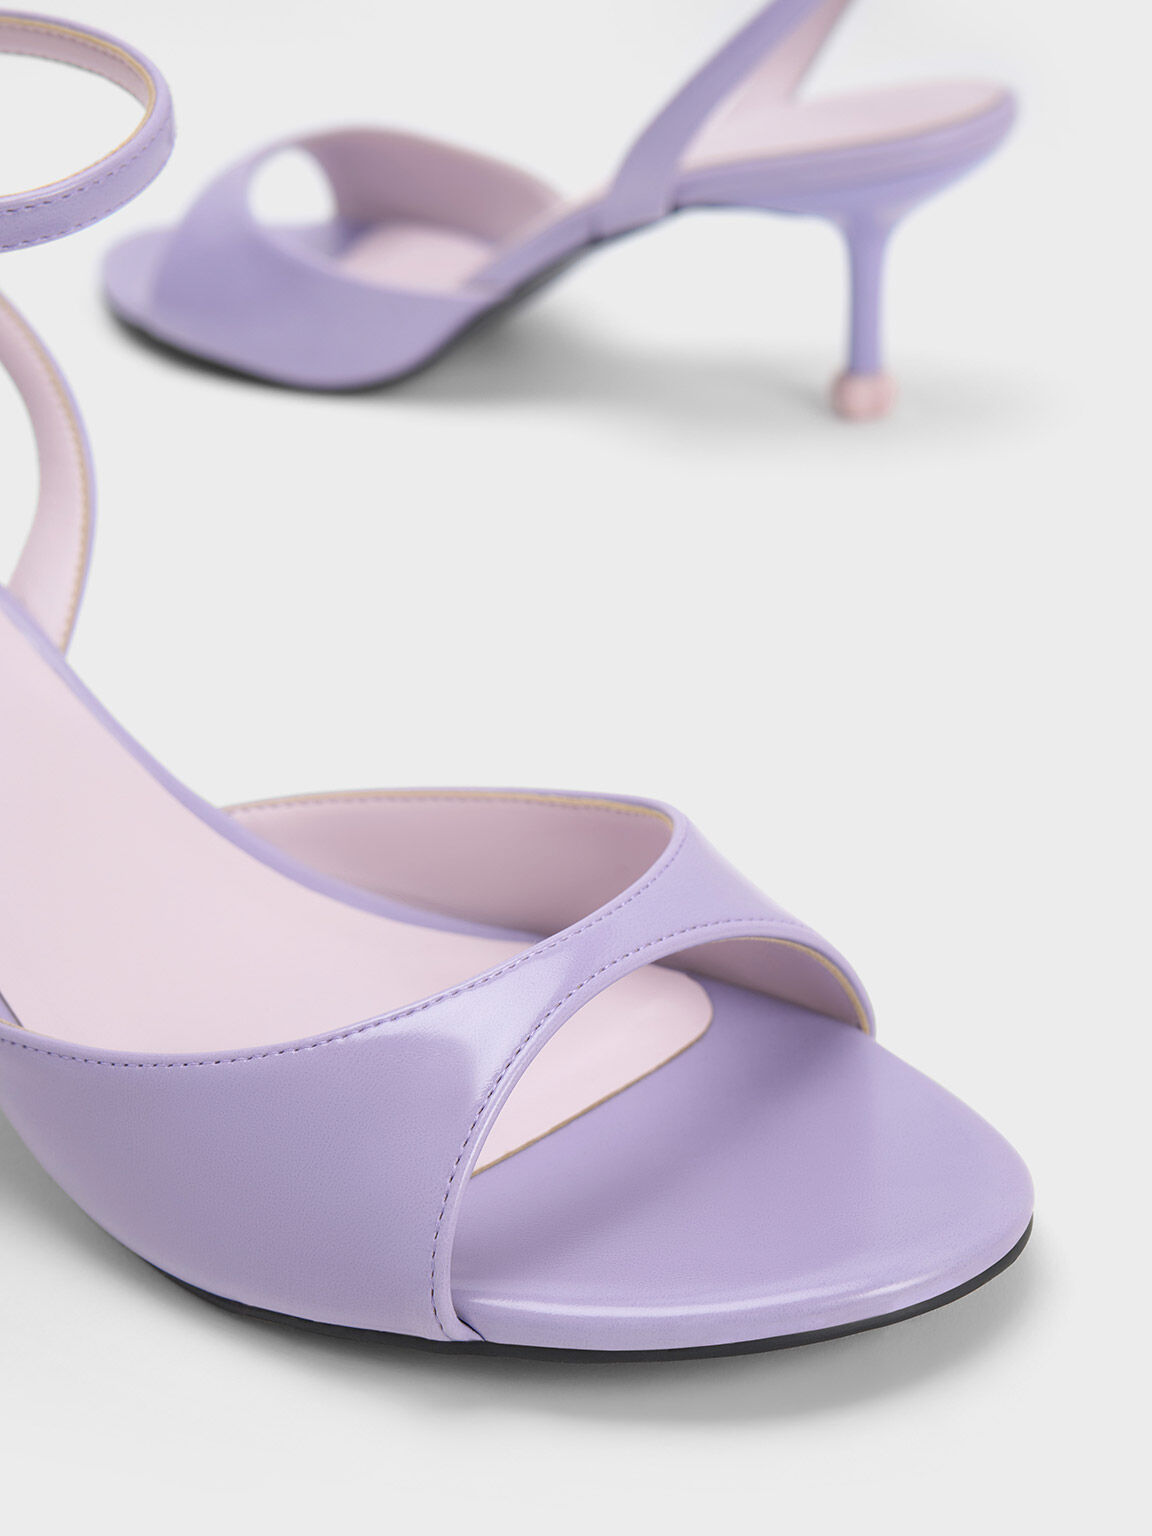 Sepatu Pumps Sculptural Heel Ankle-Strap, Purple, hi-res